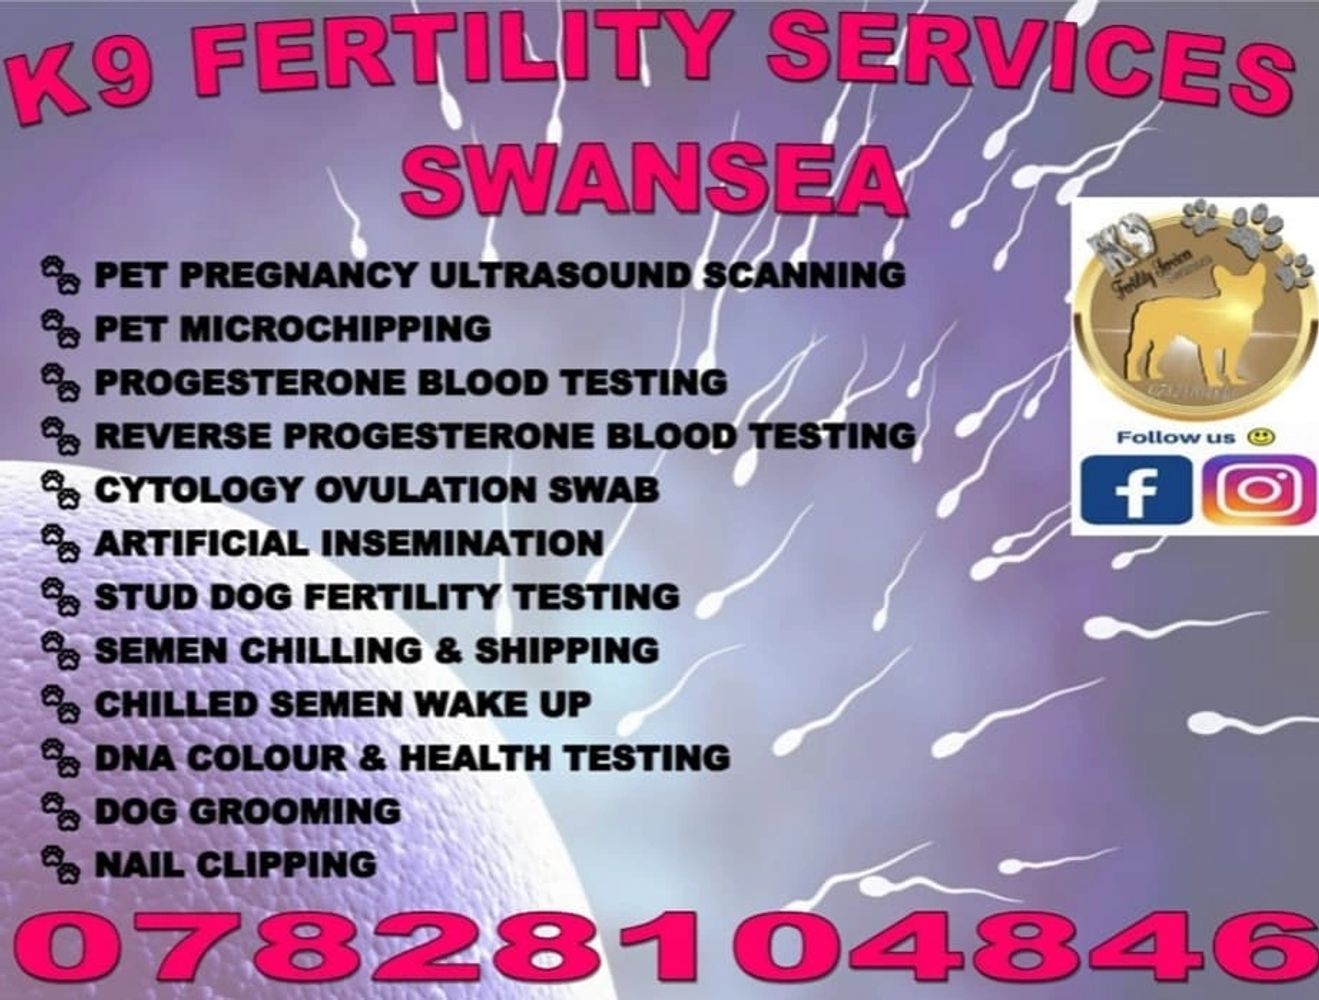 K9 fertility services Swansea, pet pregnancy scanning, progesterone blood testing, pet microchipping